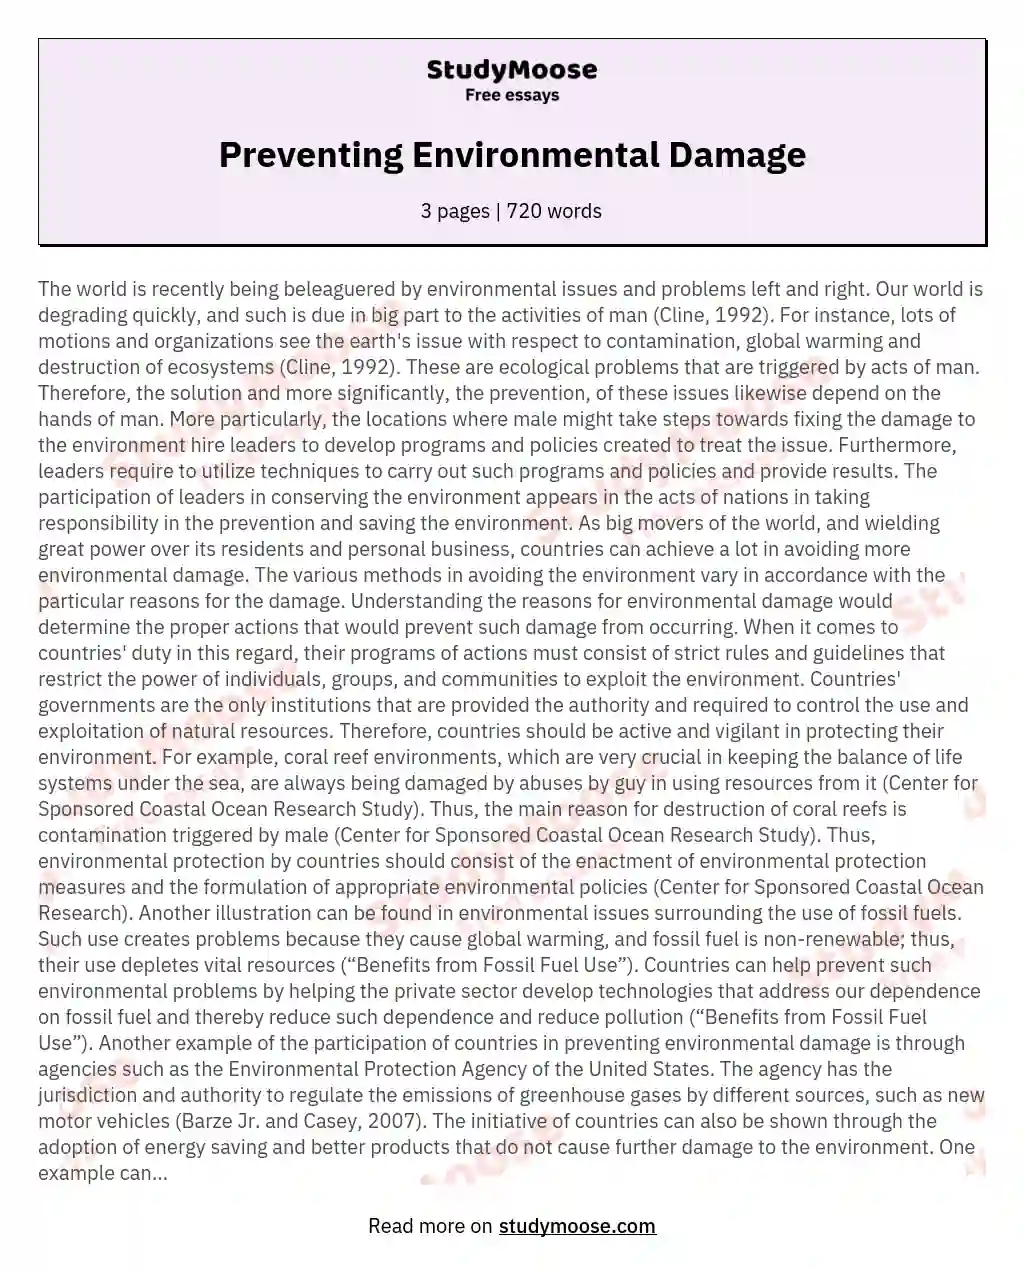 Preventing Environmental Damage essay